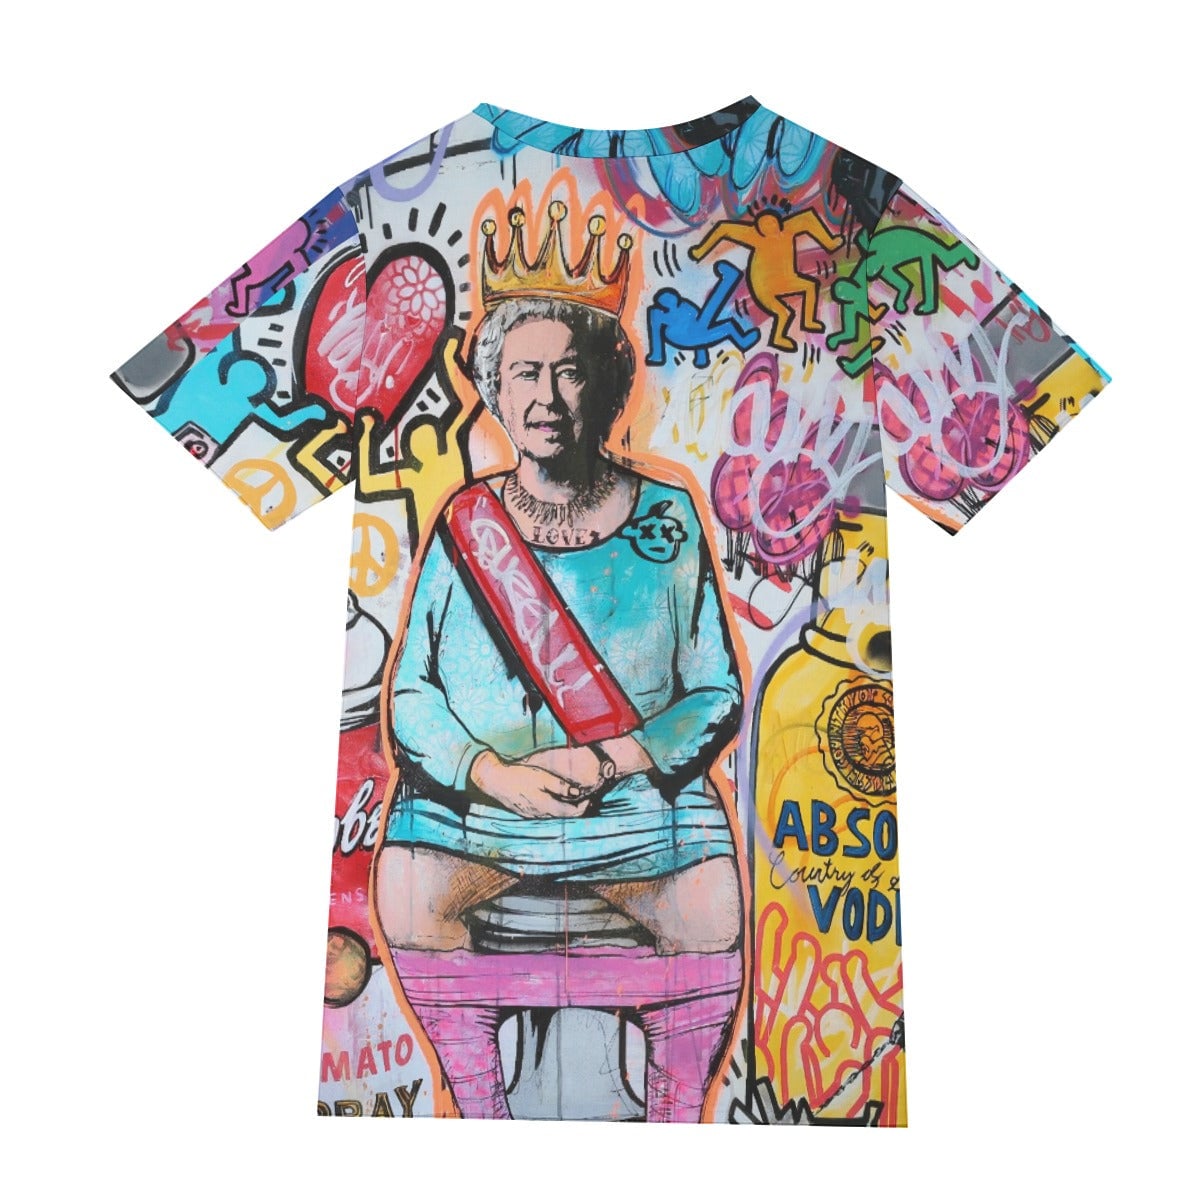 Iconic British Royal Pop Art Surrealism Collage T-Shirt